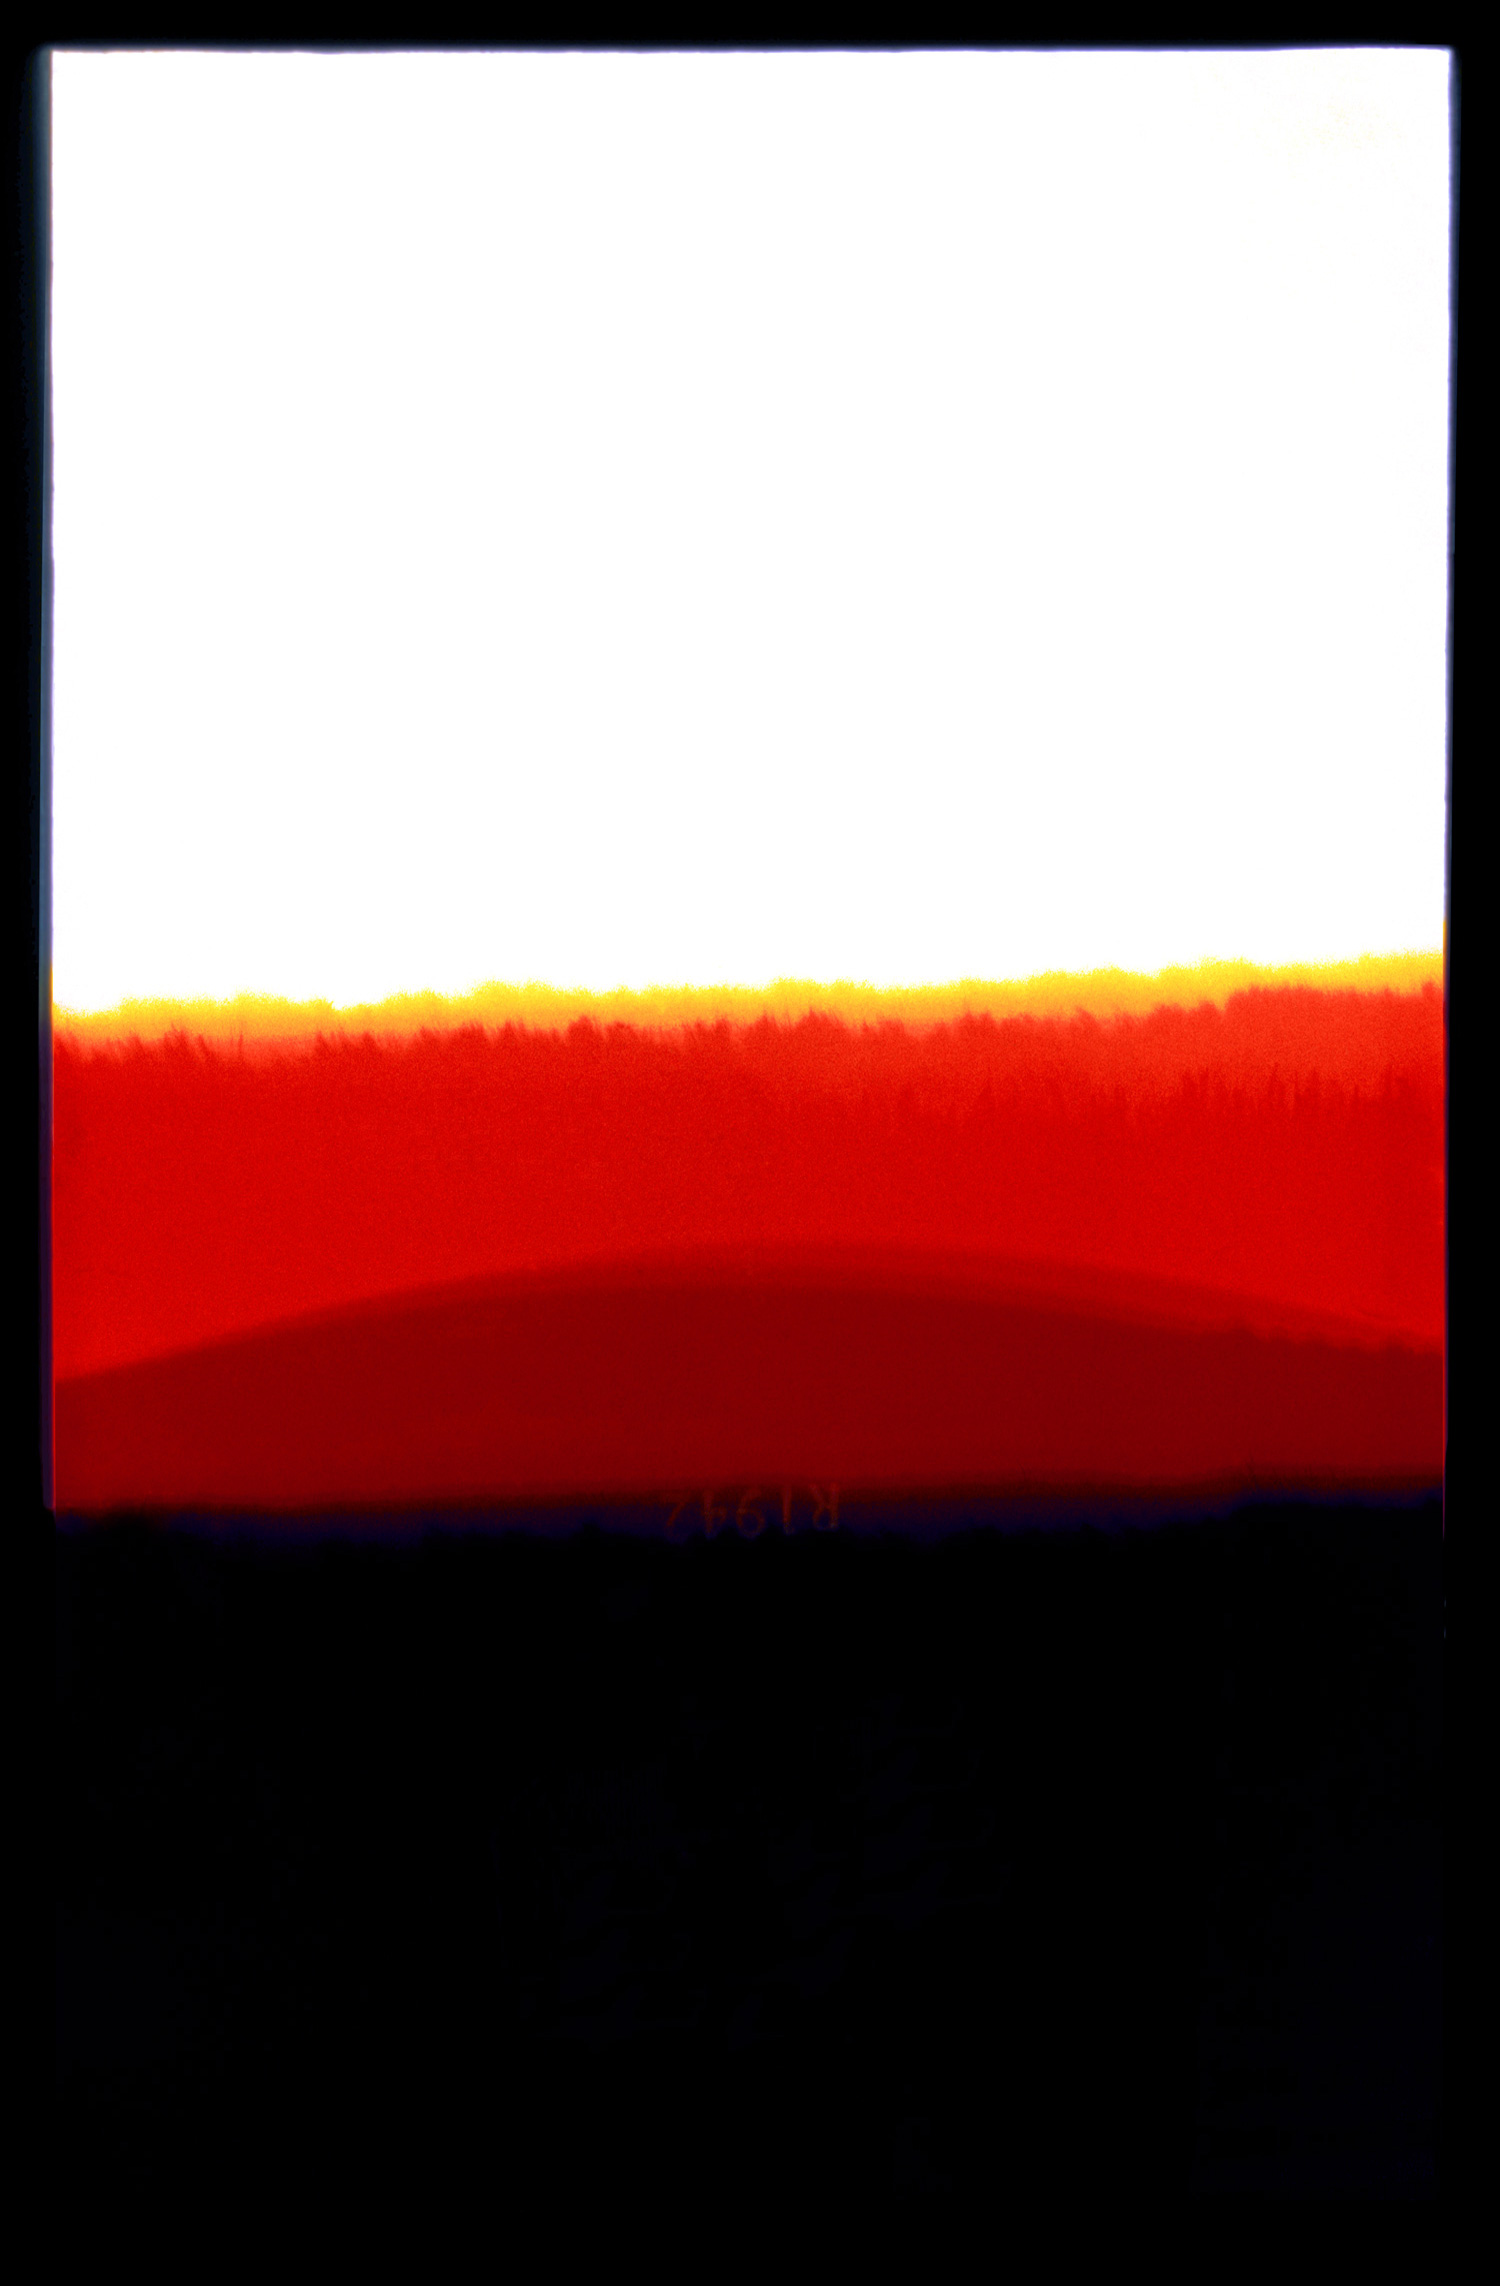   Endings - Kodachrome 64, No.00. 10/06/1975  